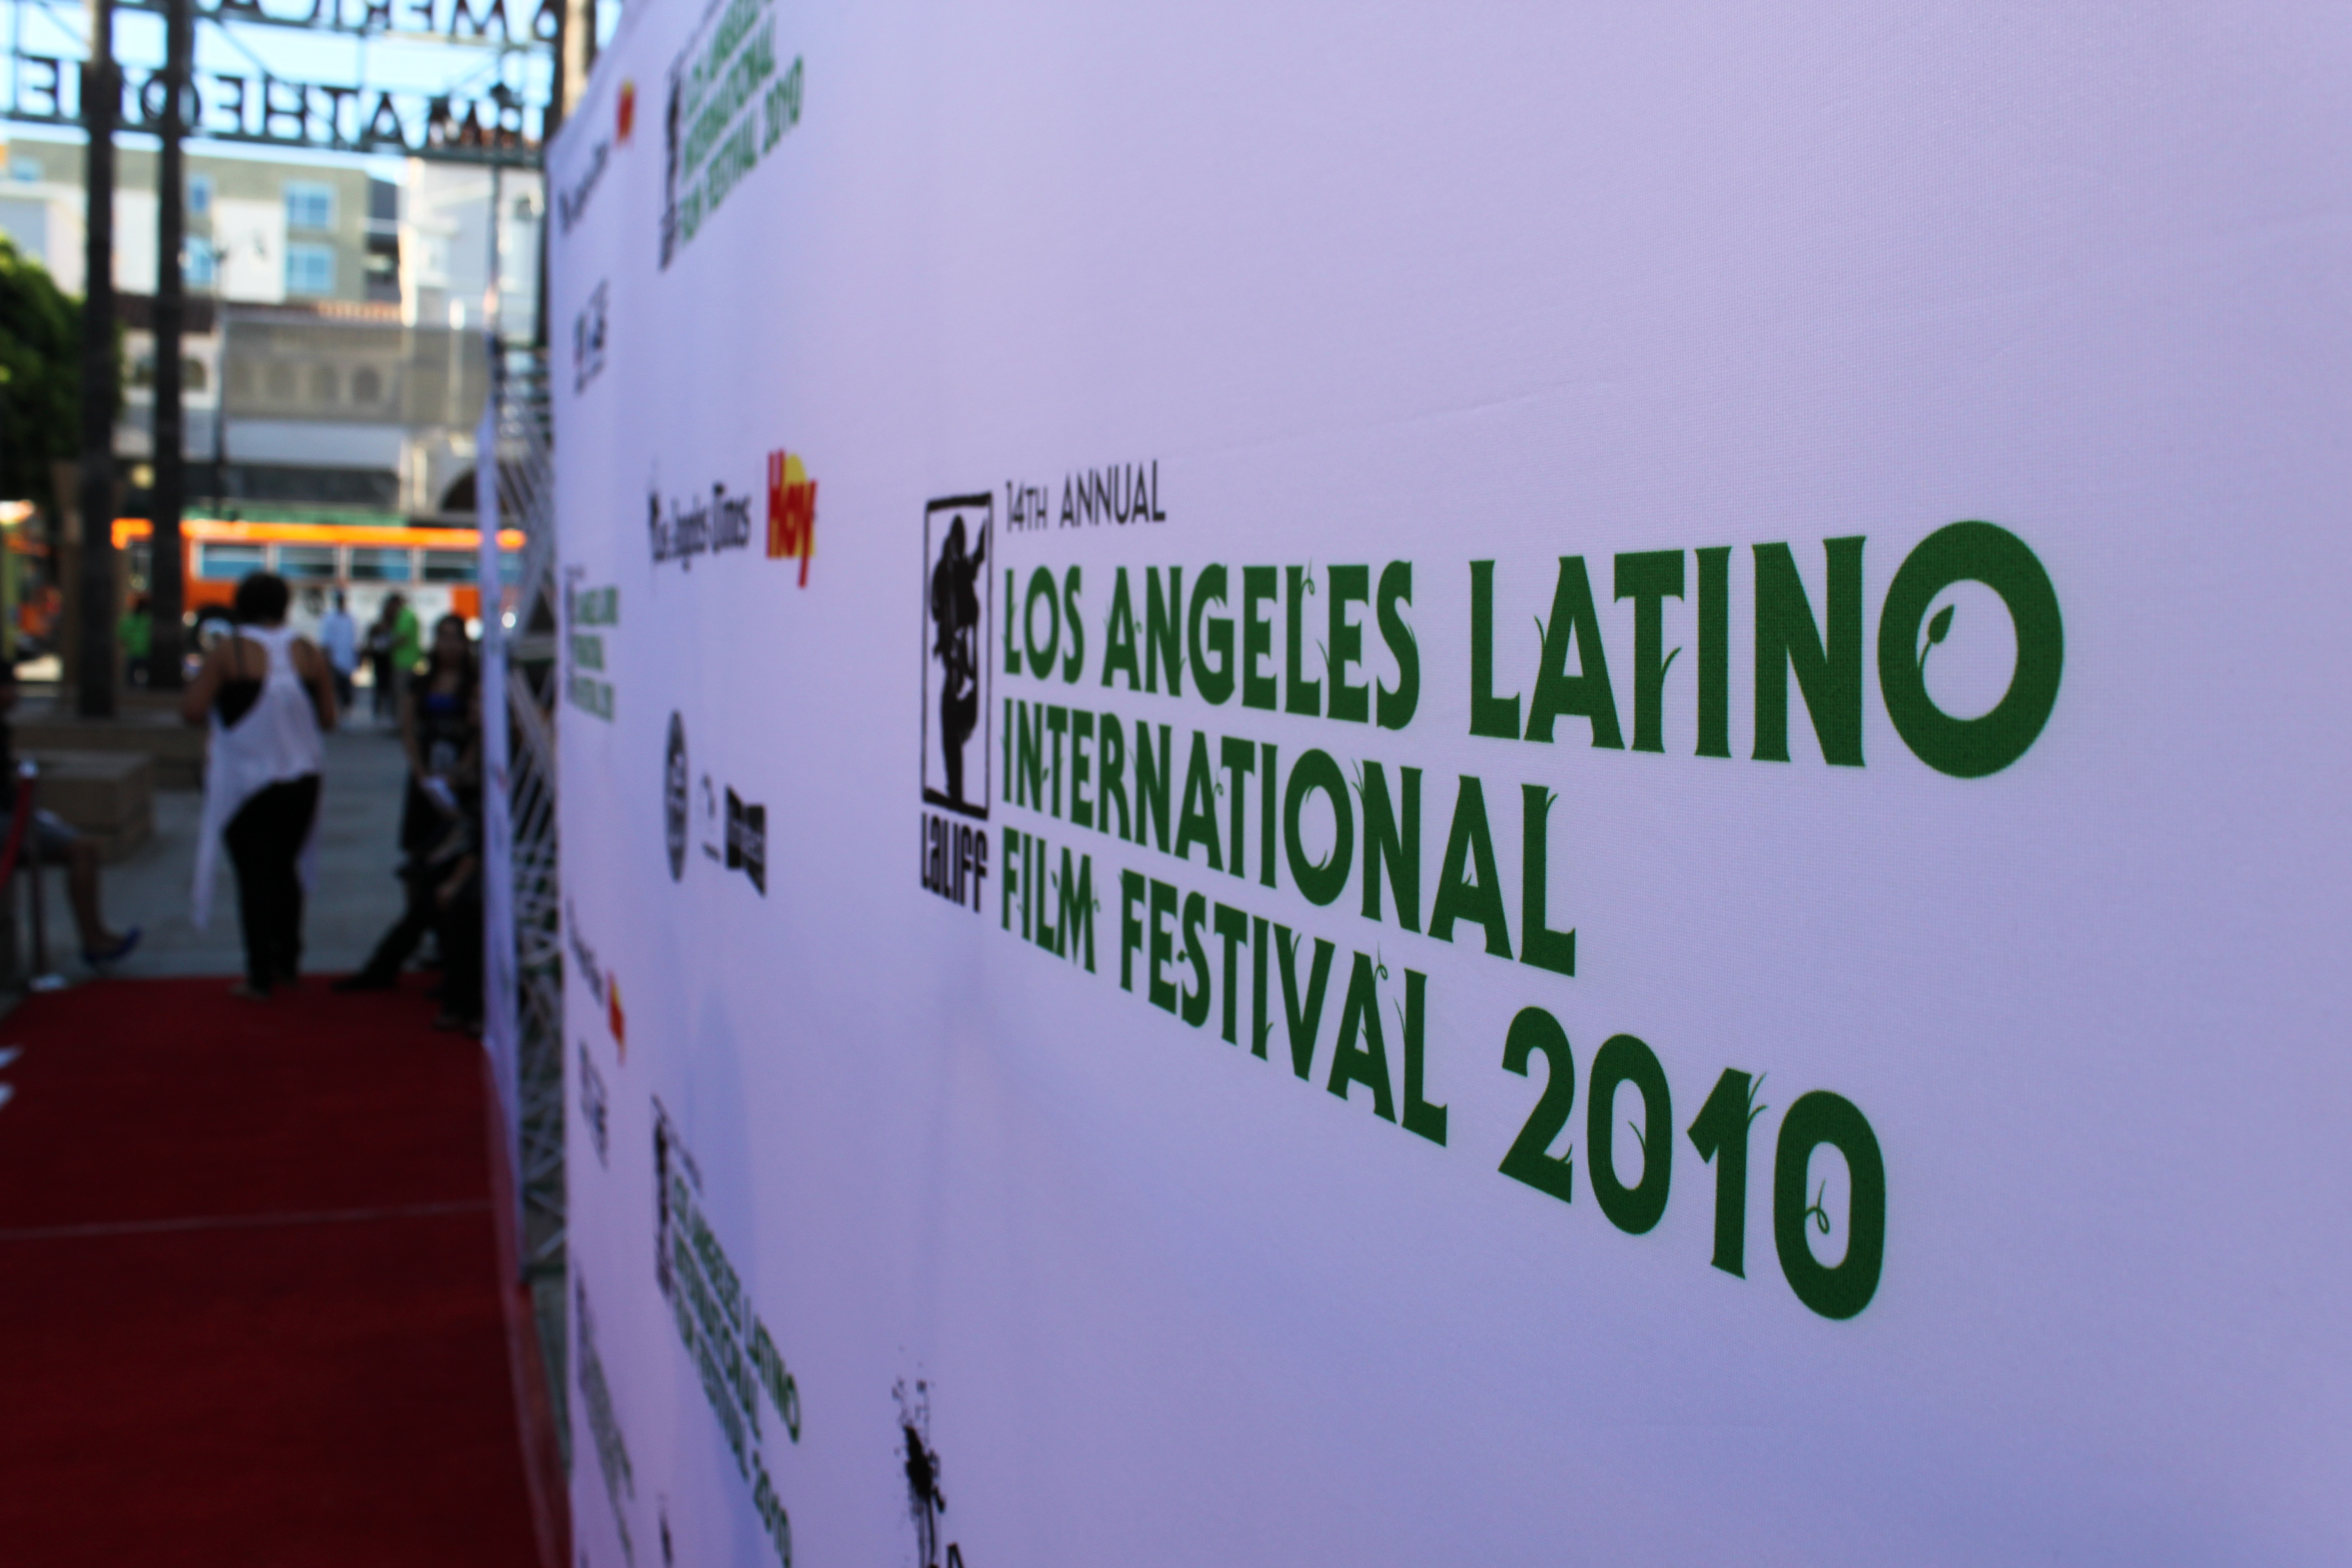 Red Carpet backdrop sponsors' banner @ The 14th Los Angeles Latino International Film Festival 2010 (